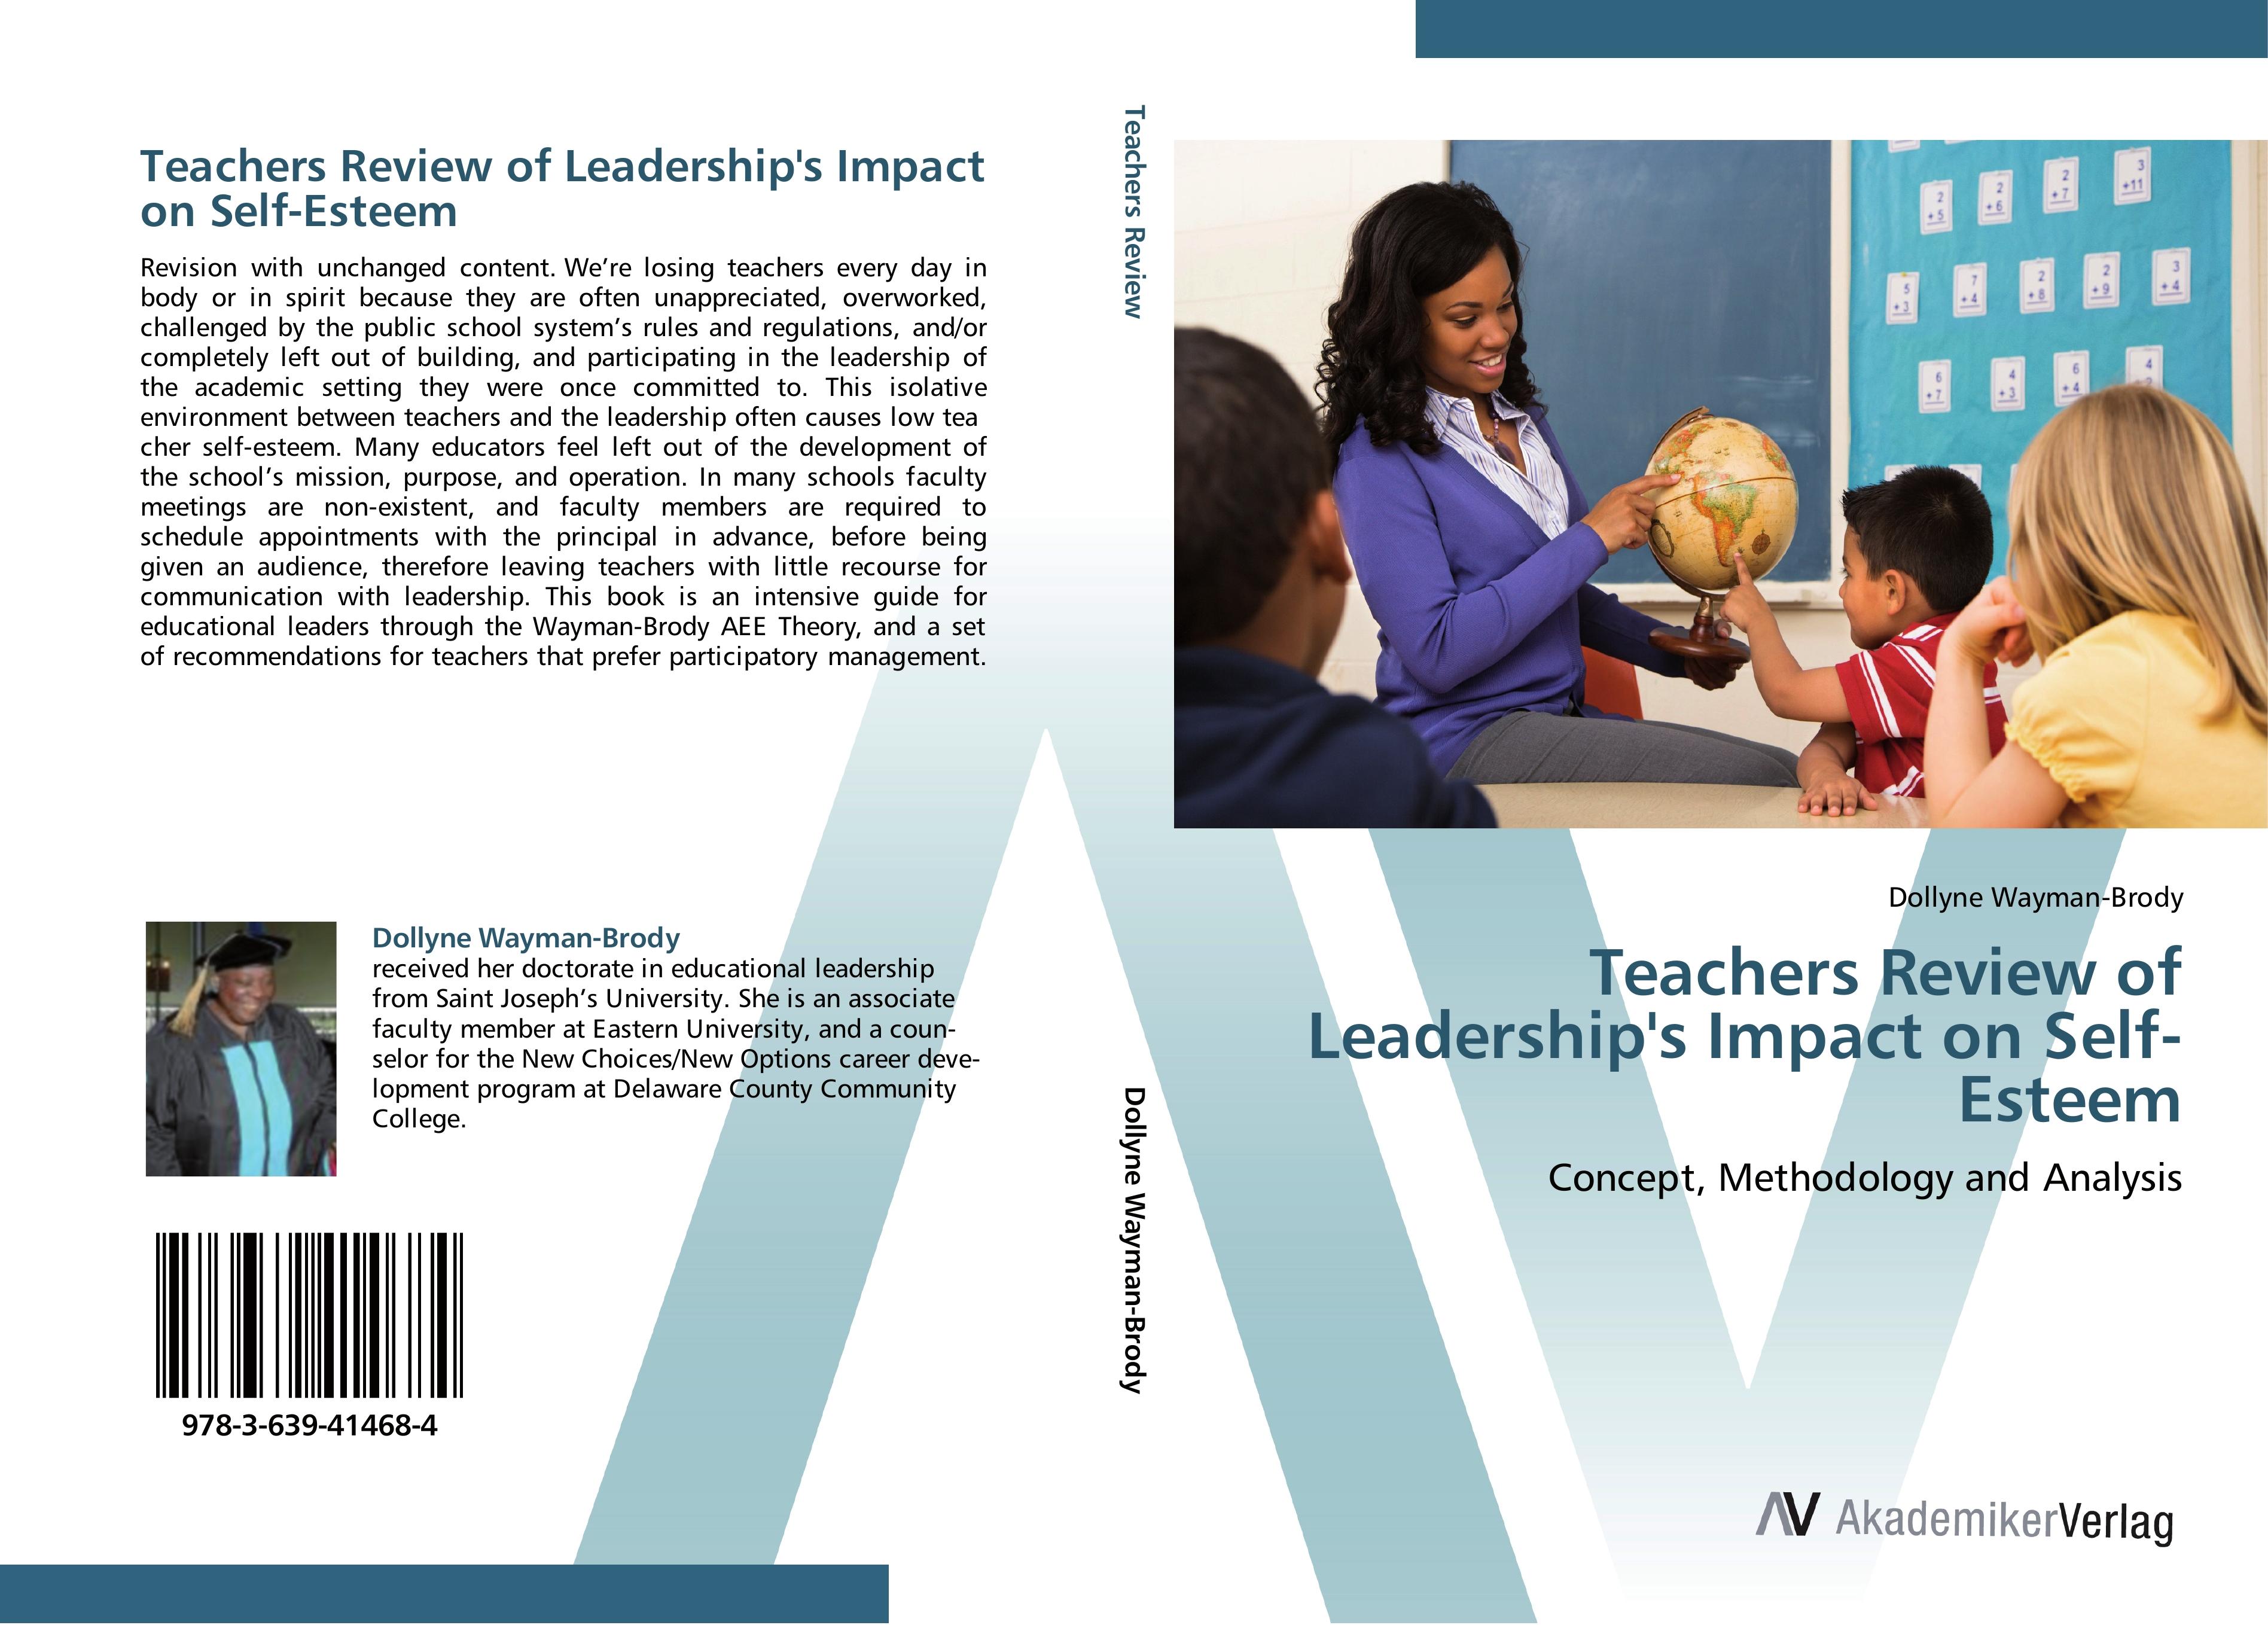 Teachers Review of Leadership's Impact on Self-Esteem - Dollyne Wayman-Brody